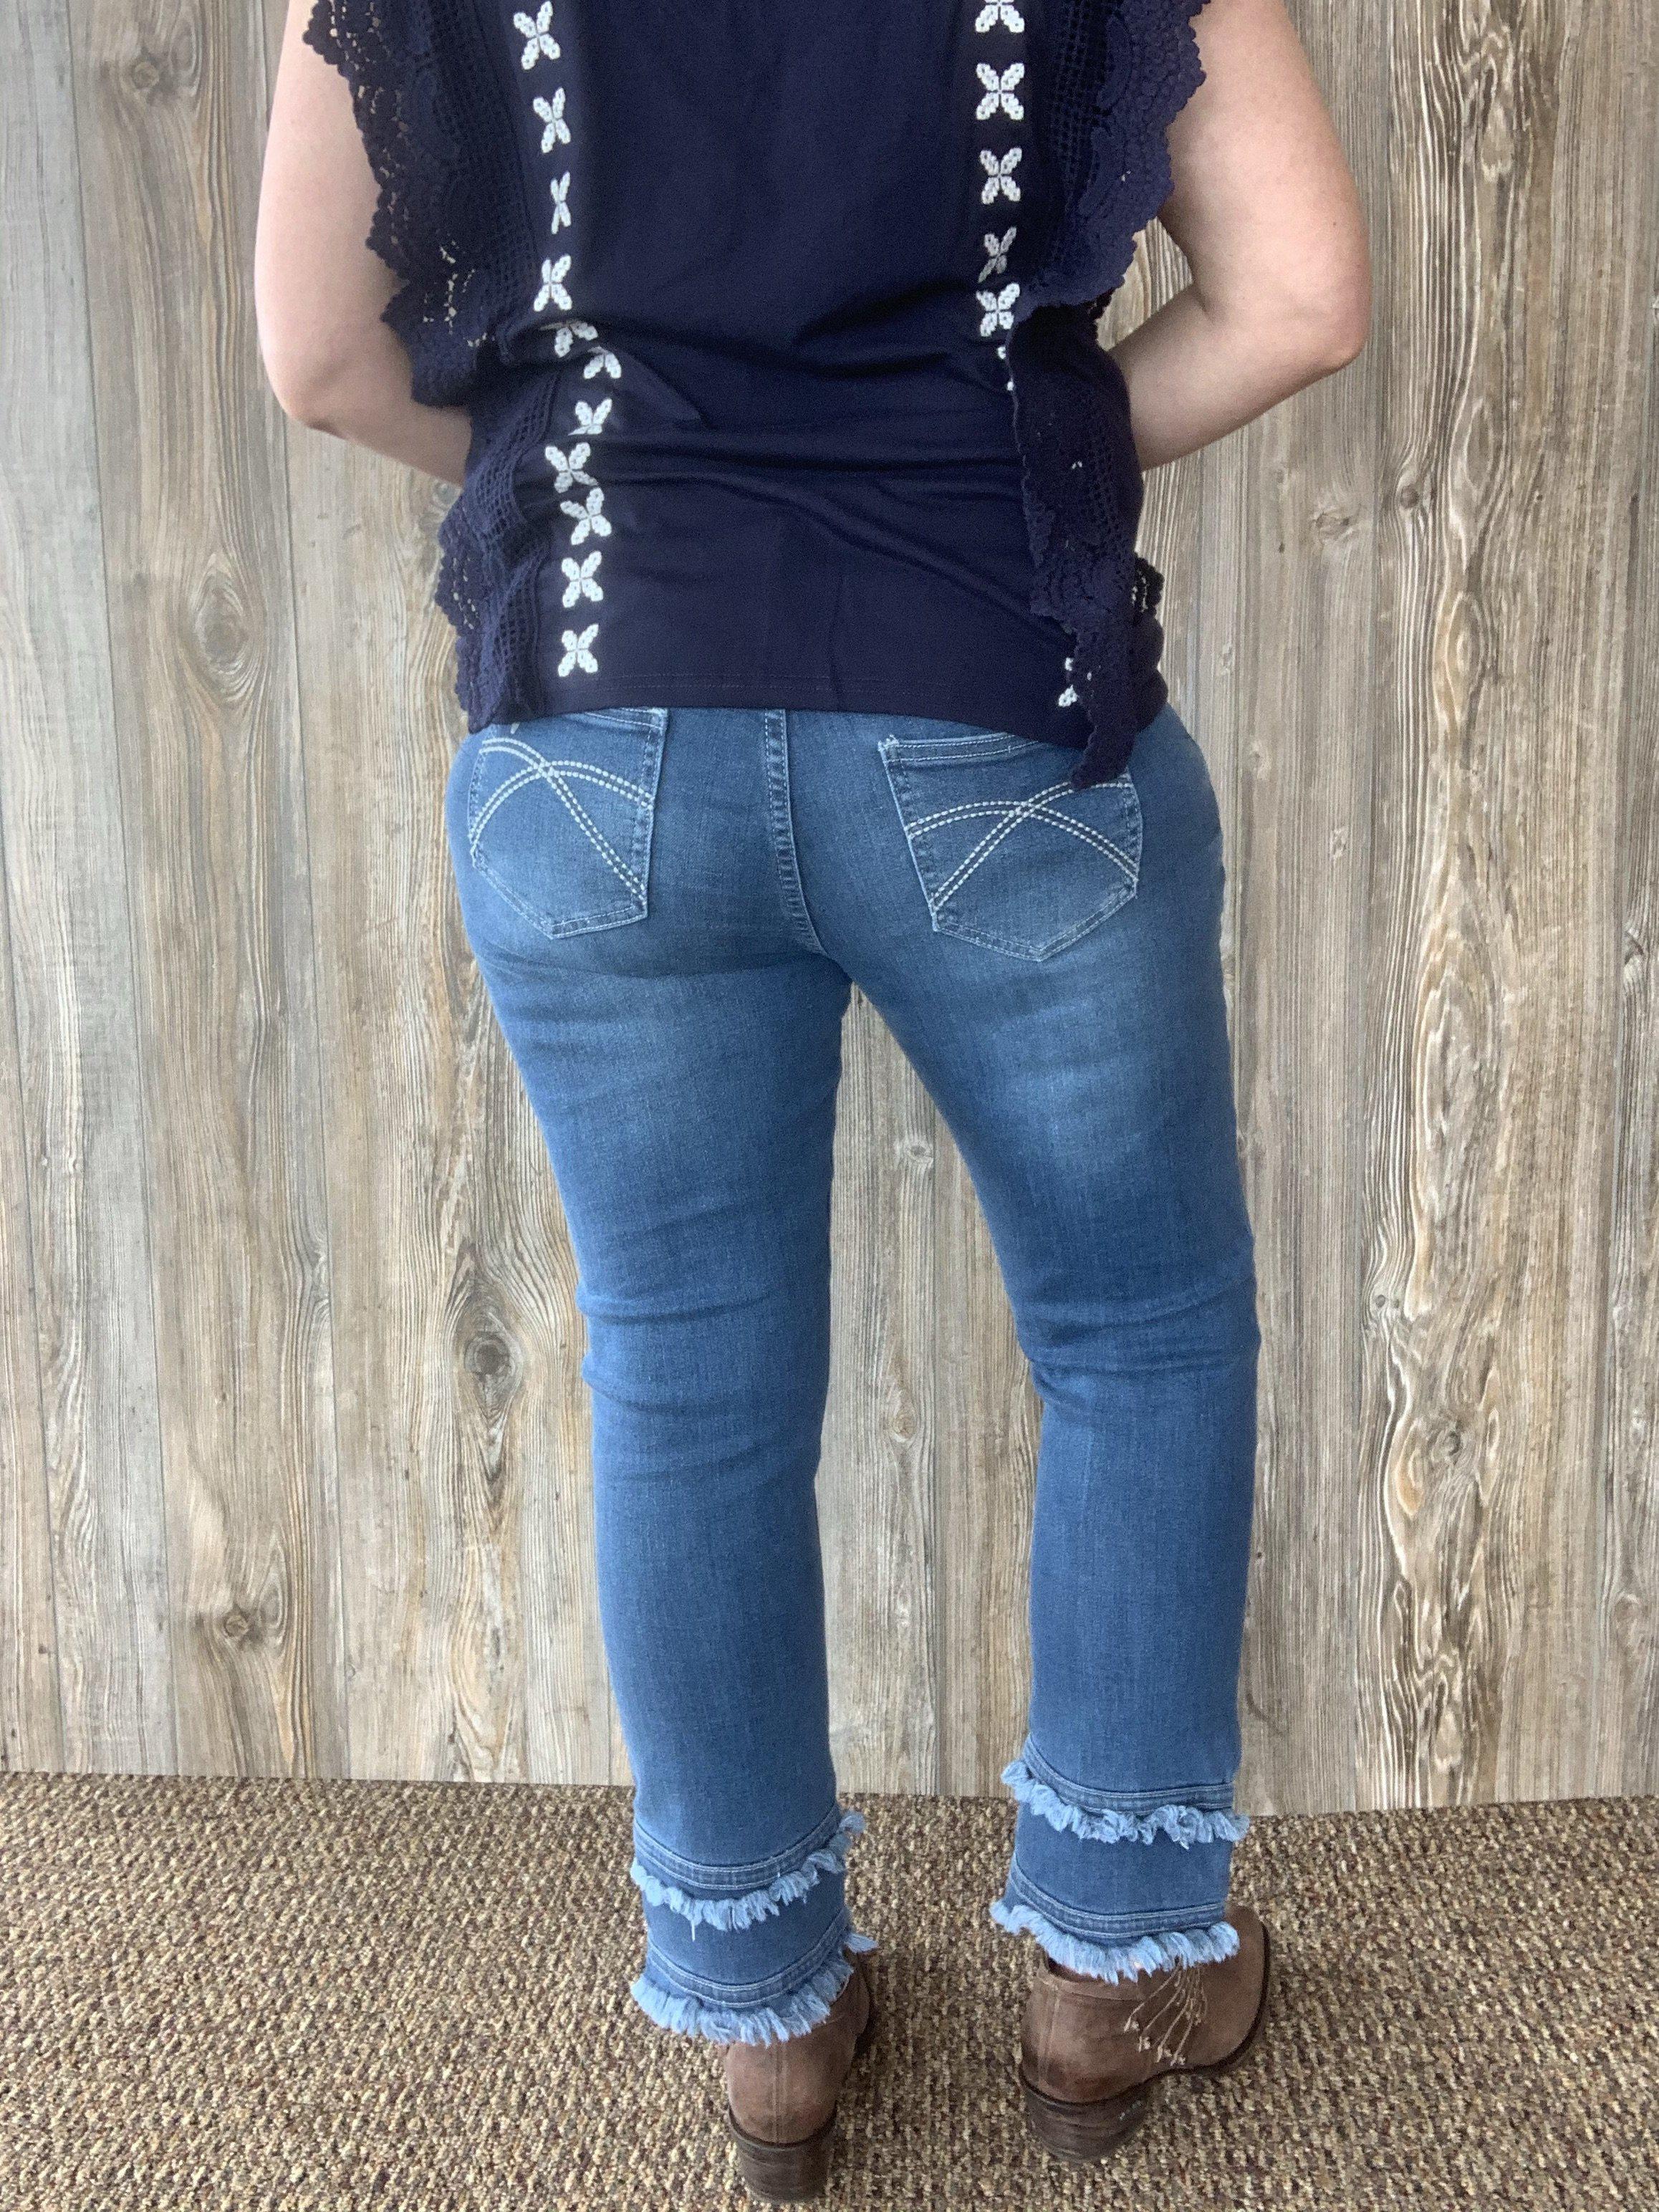 Danica Double Fringe Jeans - Indigo